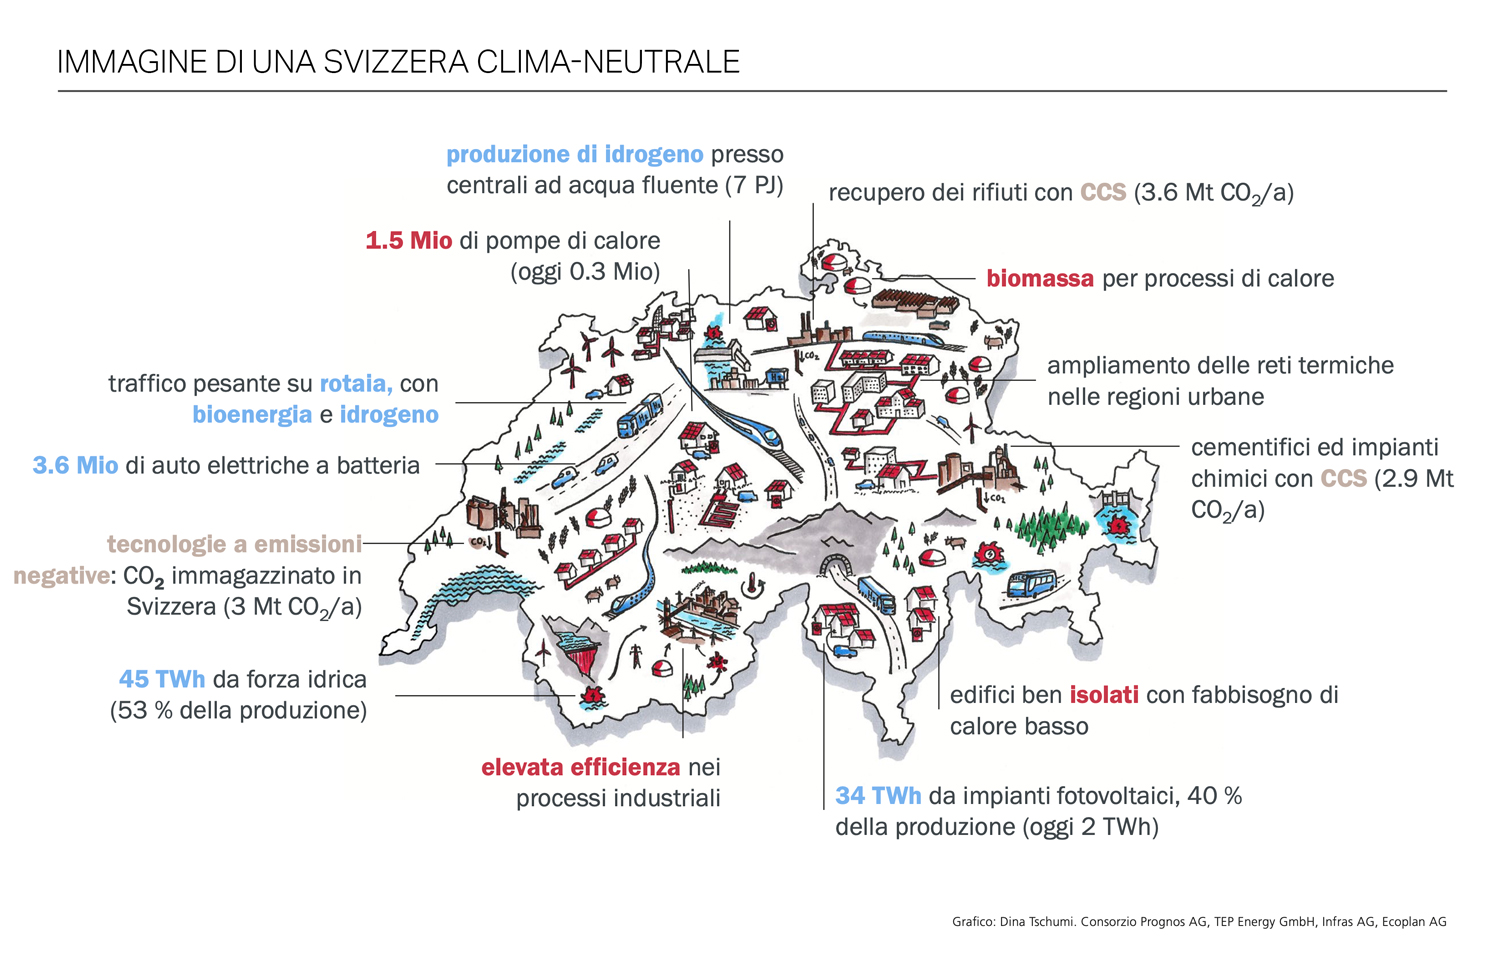 mappa immagine svizzera clima-neutrale